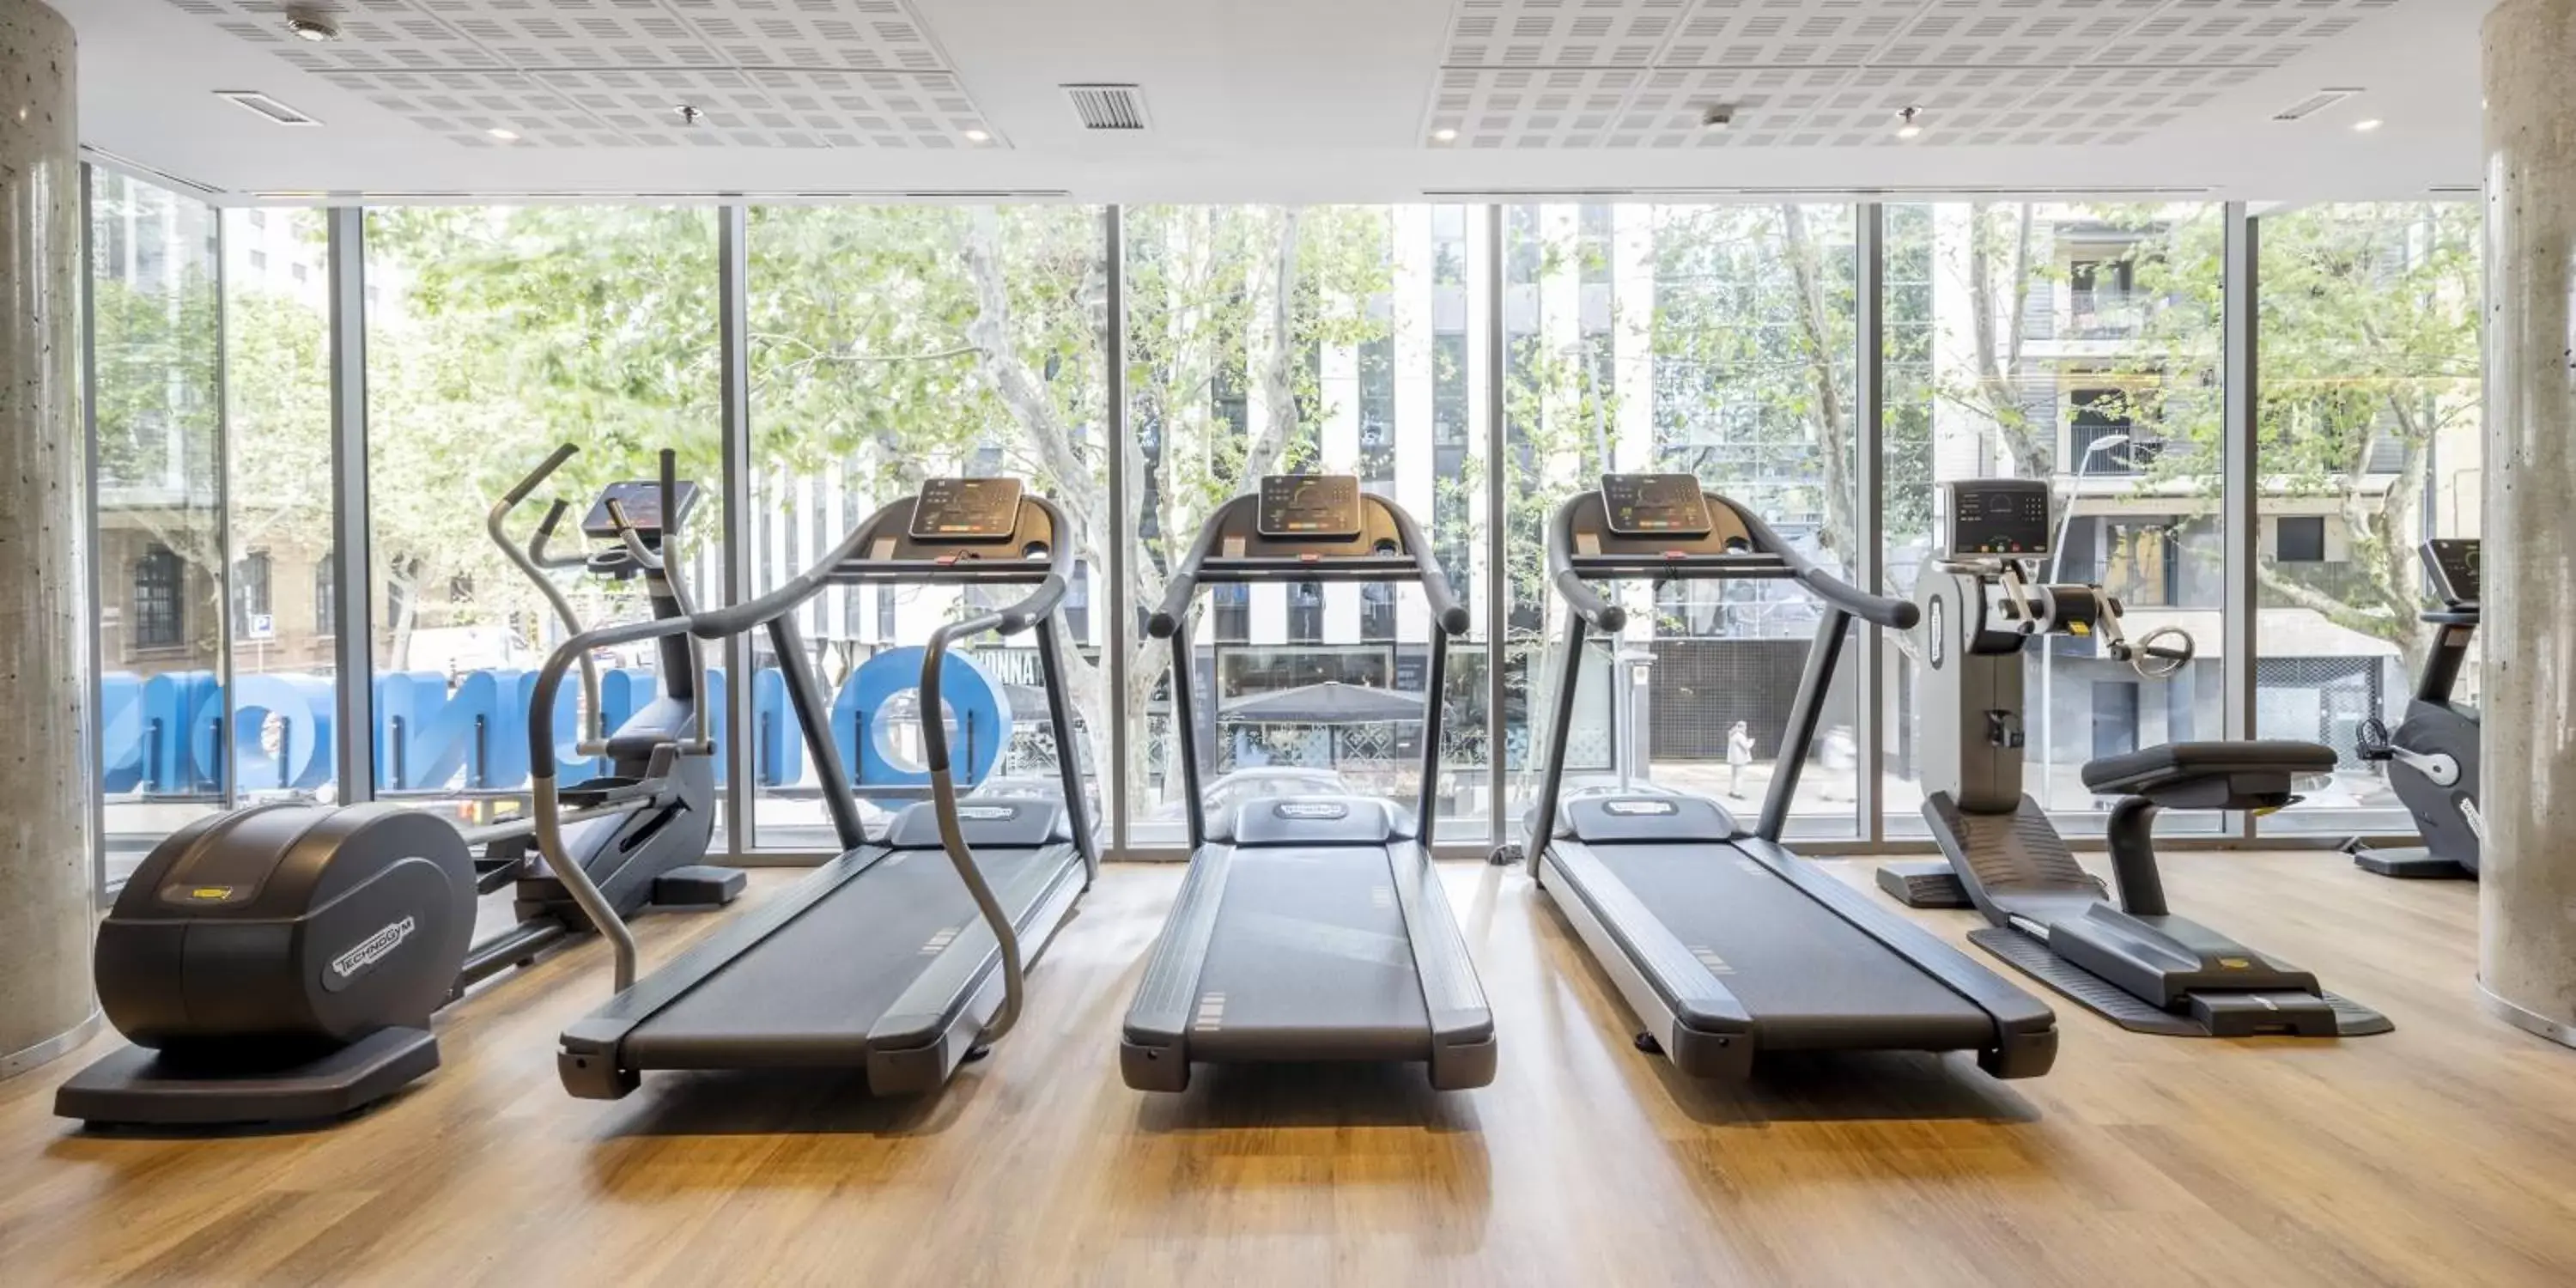 Fitness centre/facilities, Fitness Center/Facilities in Ilunion Barcelona